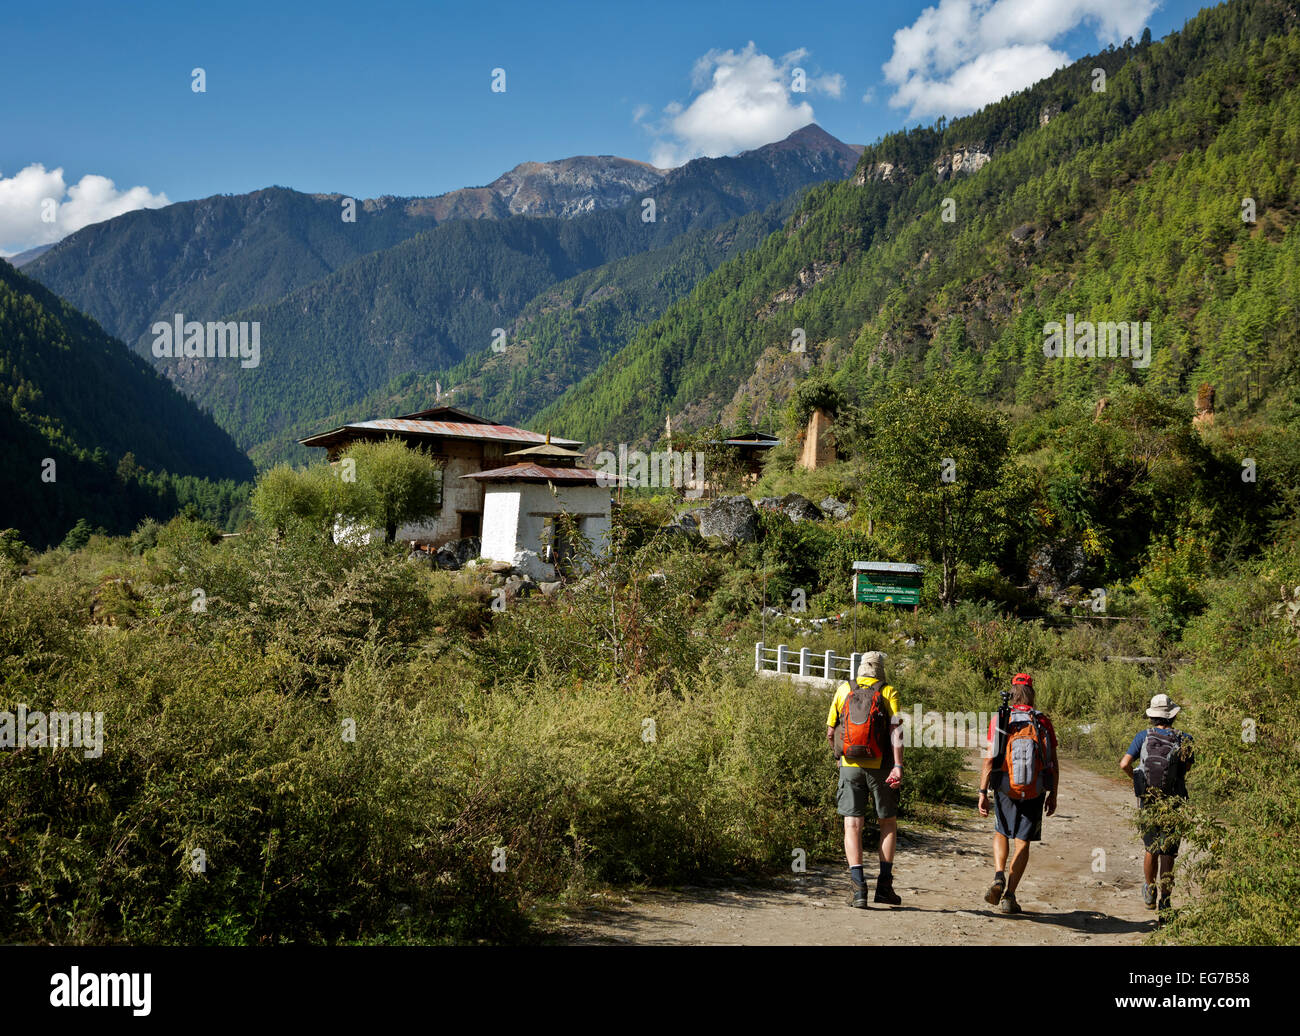 BHUTAN - Trekkers on the Jhomolhari 2 Trek heading up the Paro Chhu Valley to the entrance to Jigme Dorji National Park. Stock Photo